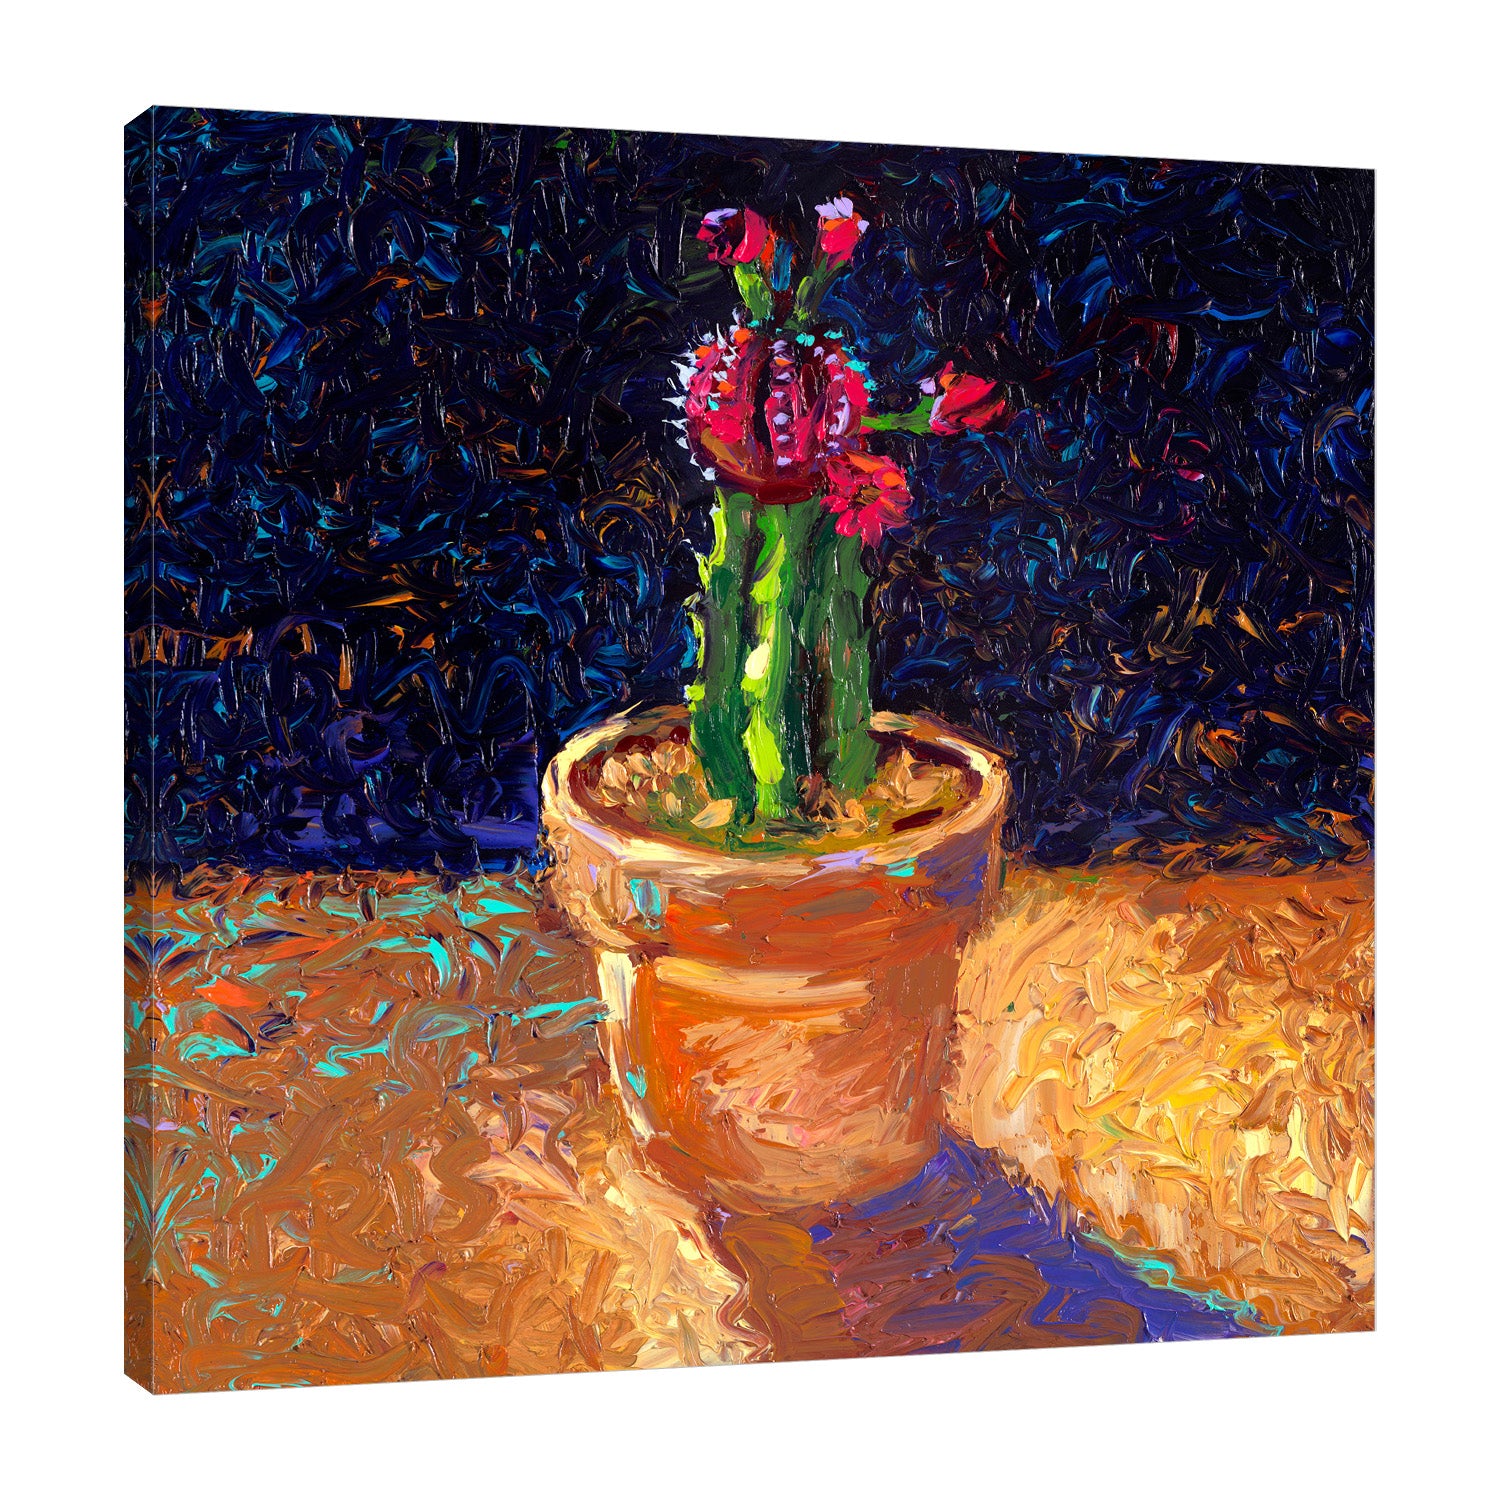 Iris-Scott,Modern & Contemporary,Animals,Landscape & Nature,Abstract,Impressionism,surreal,finger paint,floral,cactus,plant,pot,,